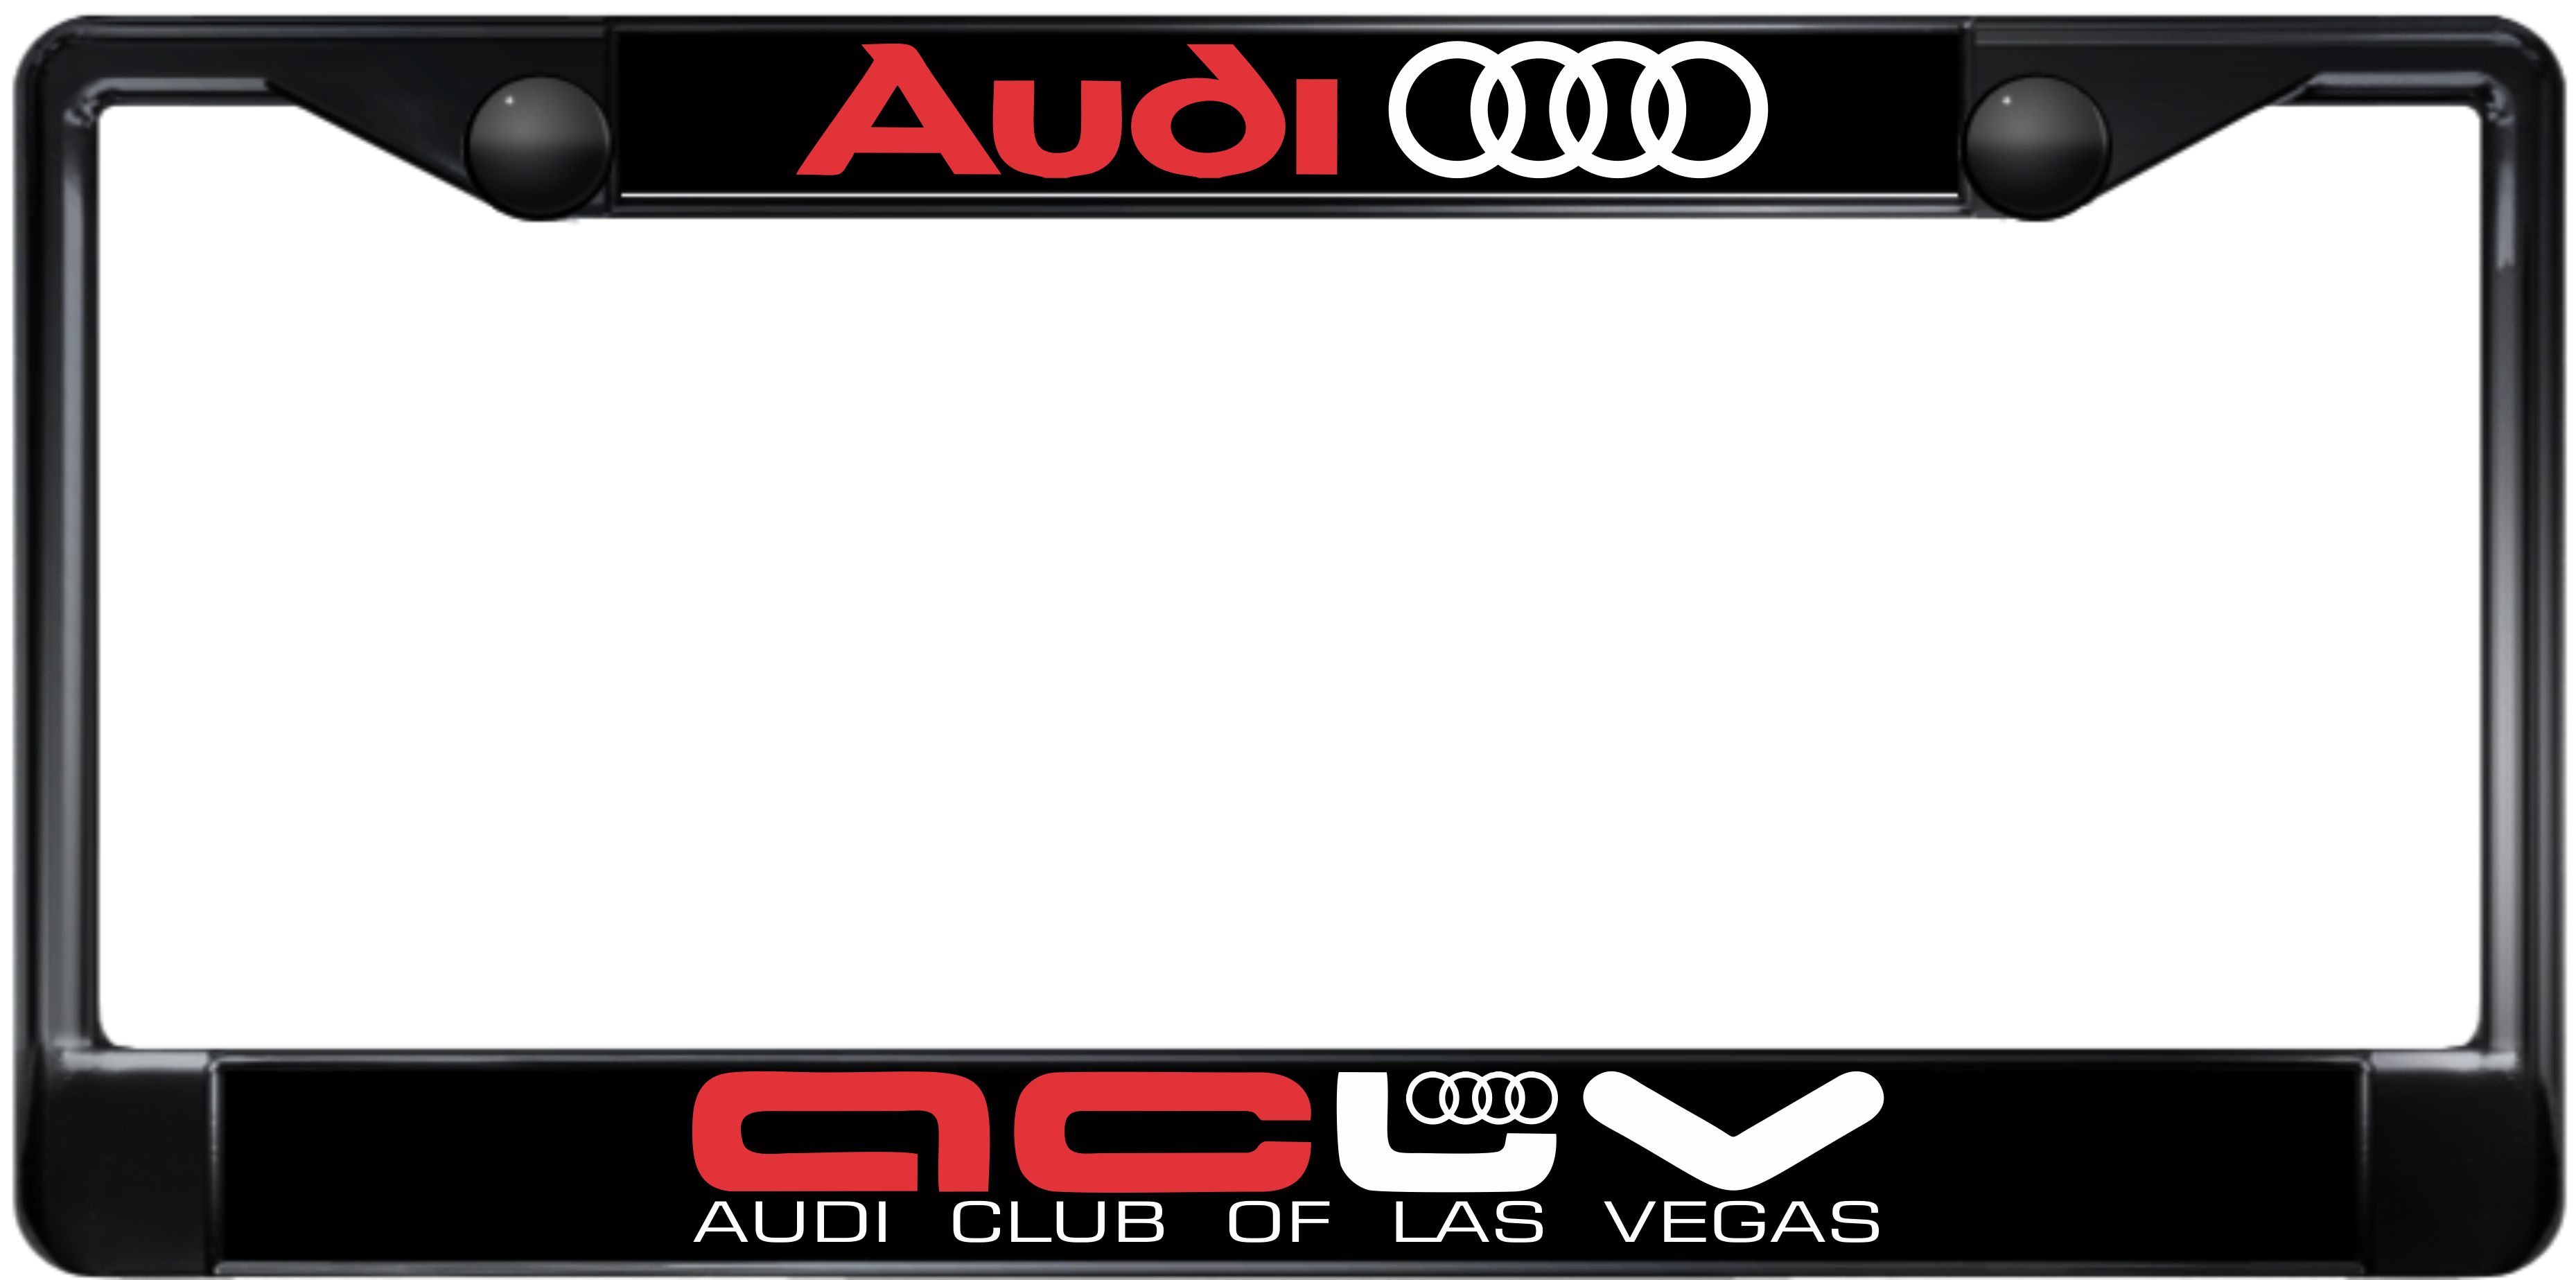 Audi of Las Vegas